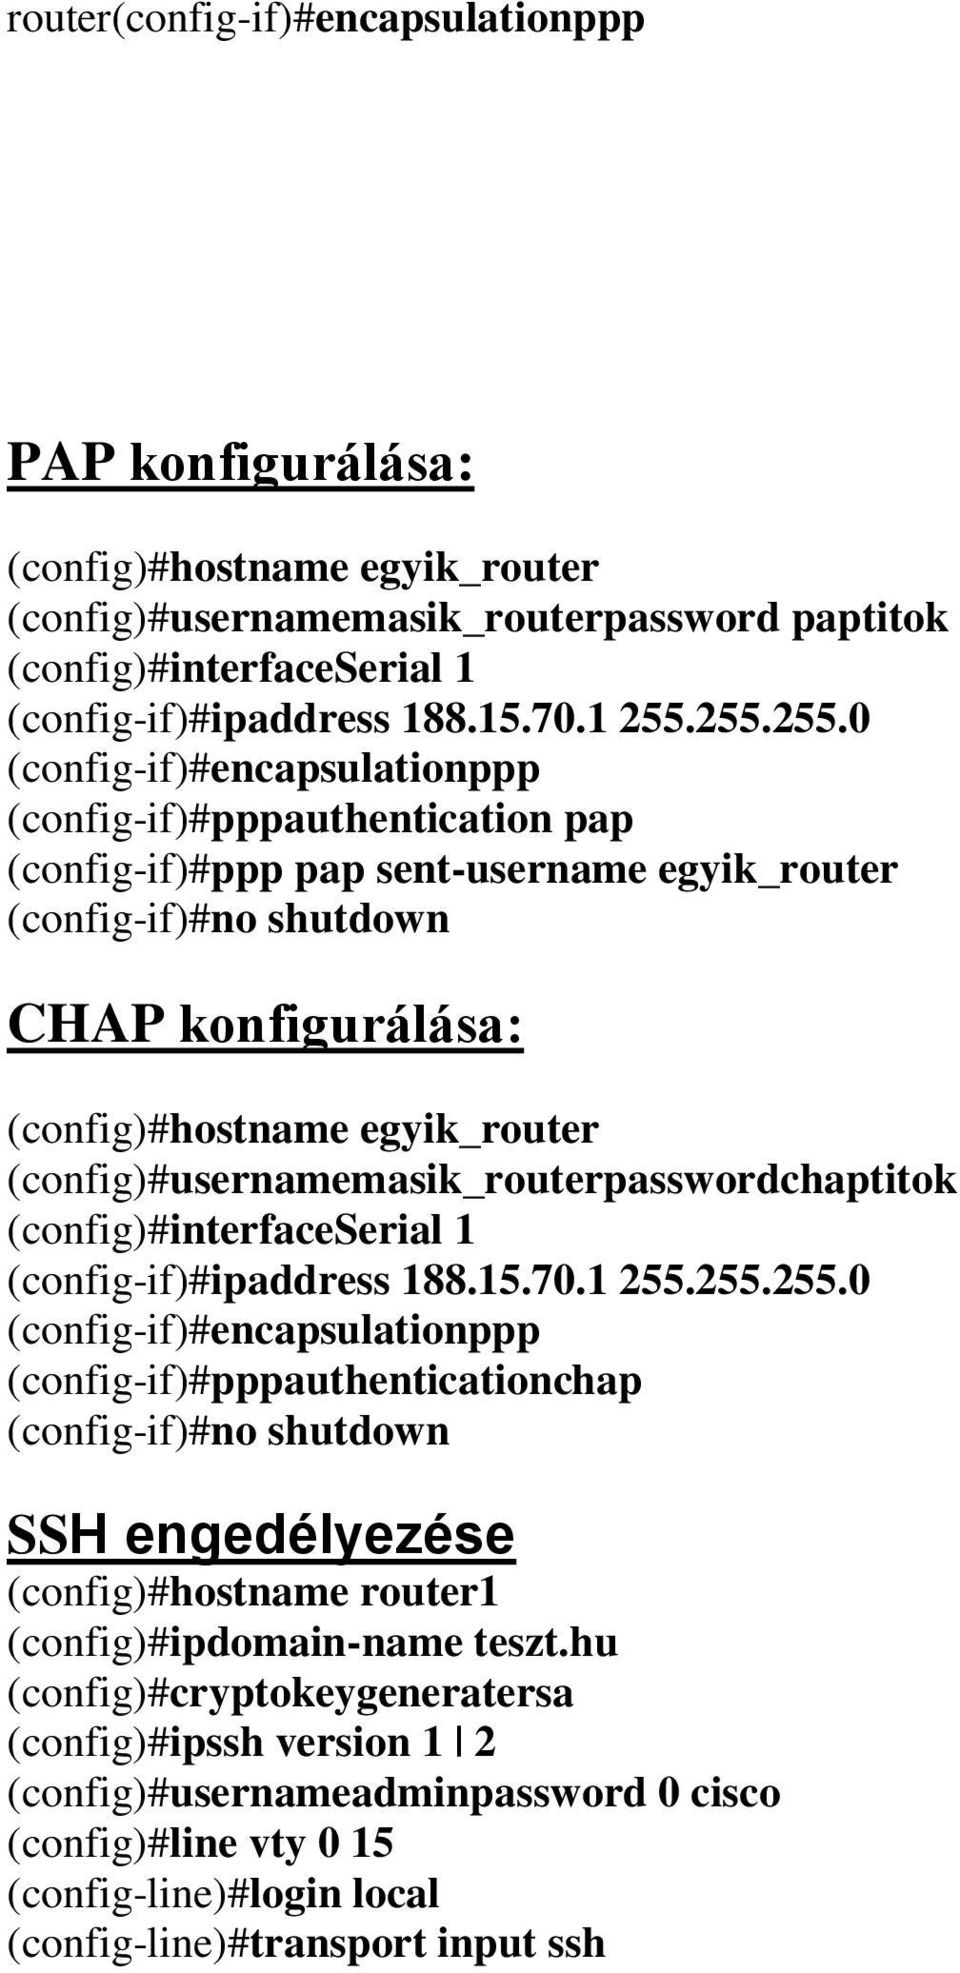 (config)#usernamemasik_routerpasswordchaptitok (config)#interfaceserial 1 (config-if)#ipaddress 188.15.70.1 255.